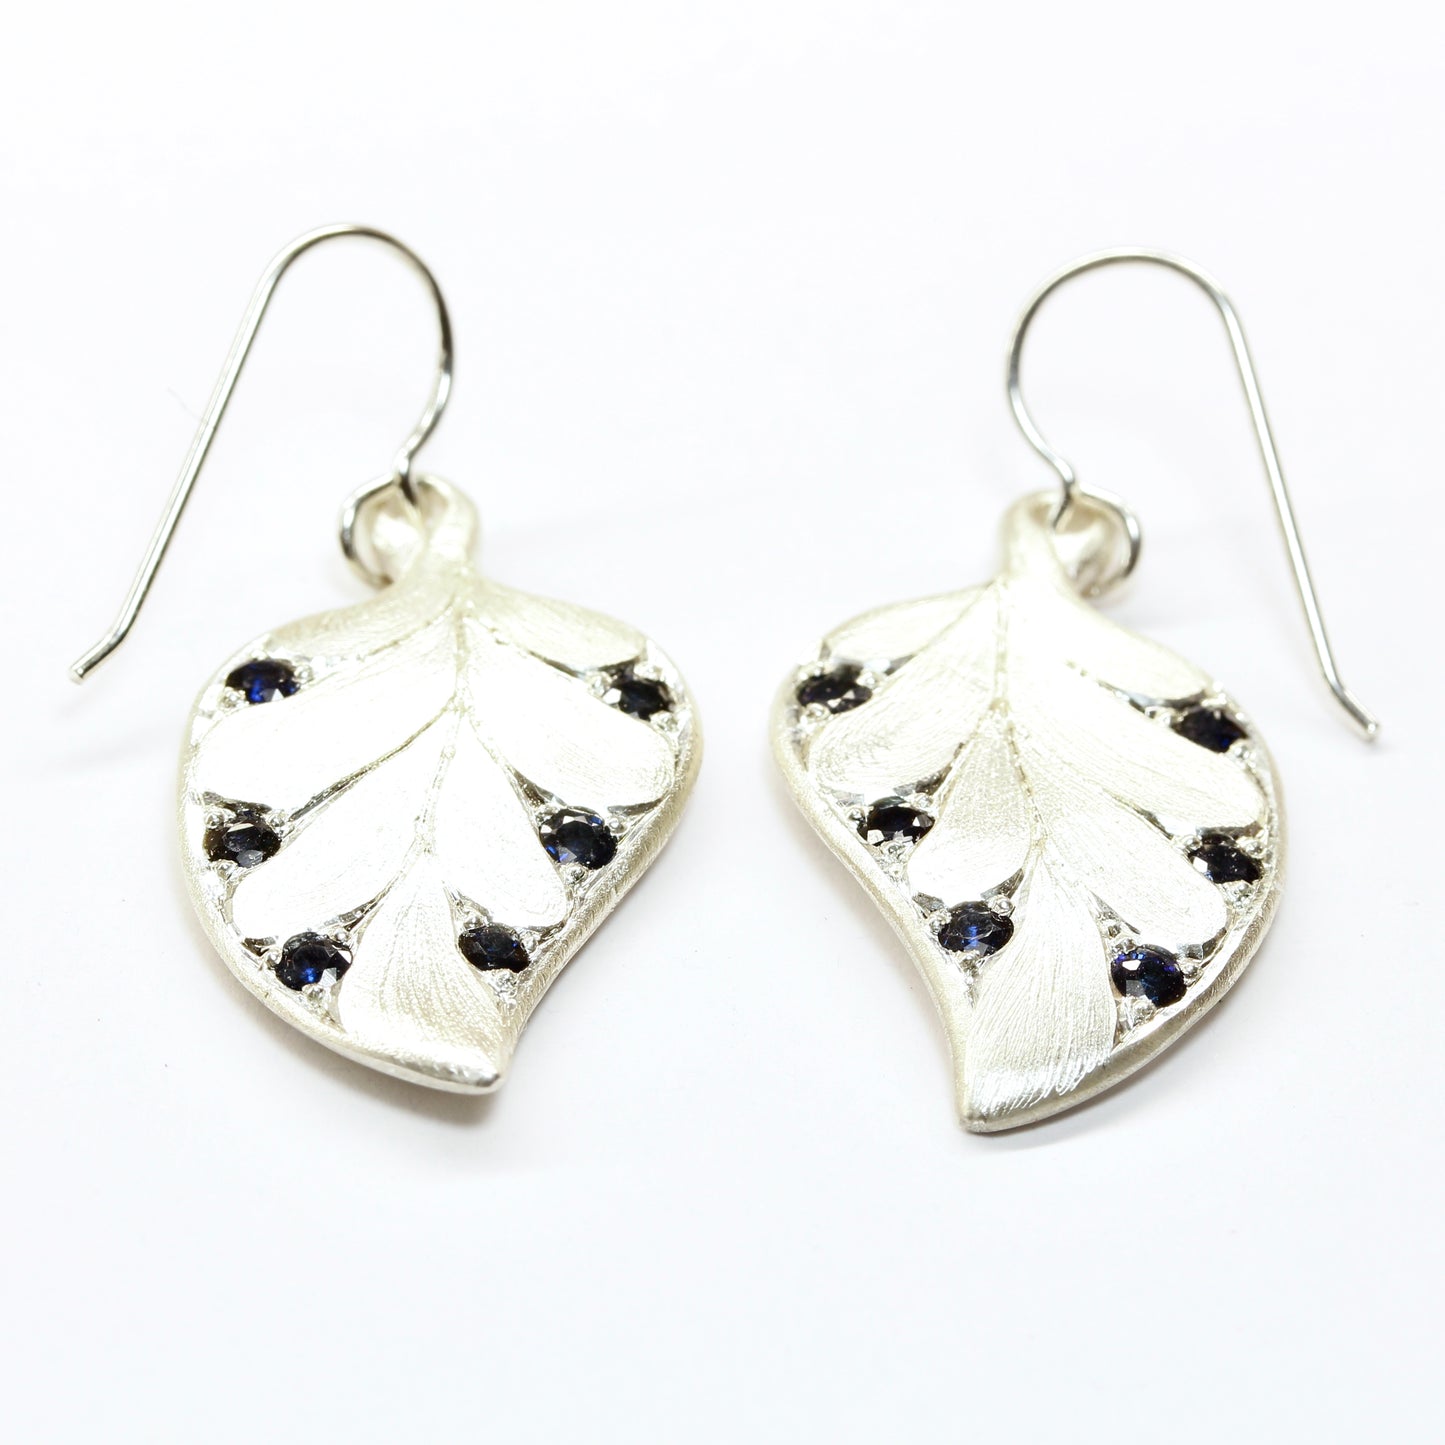 Art nouveau leaf earrings with sapphires